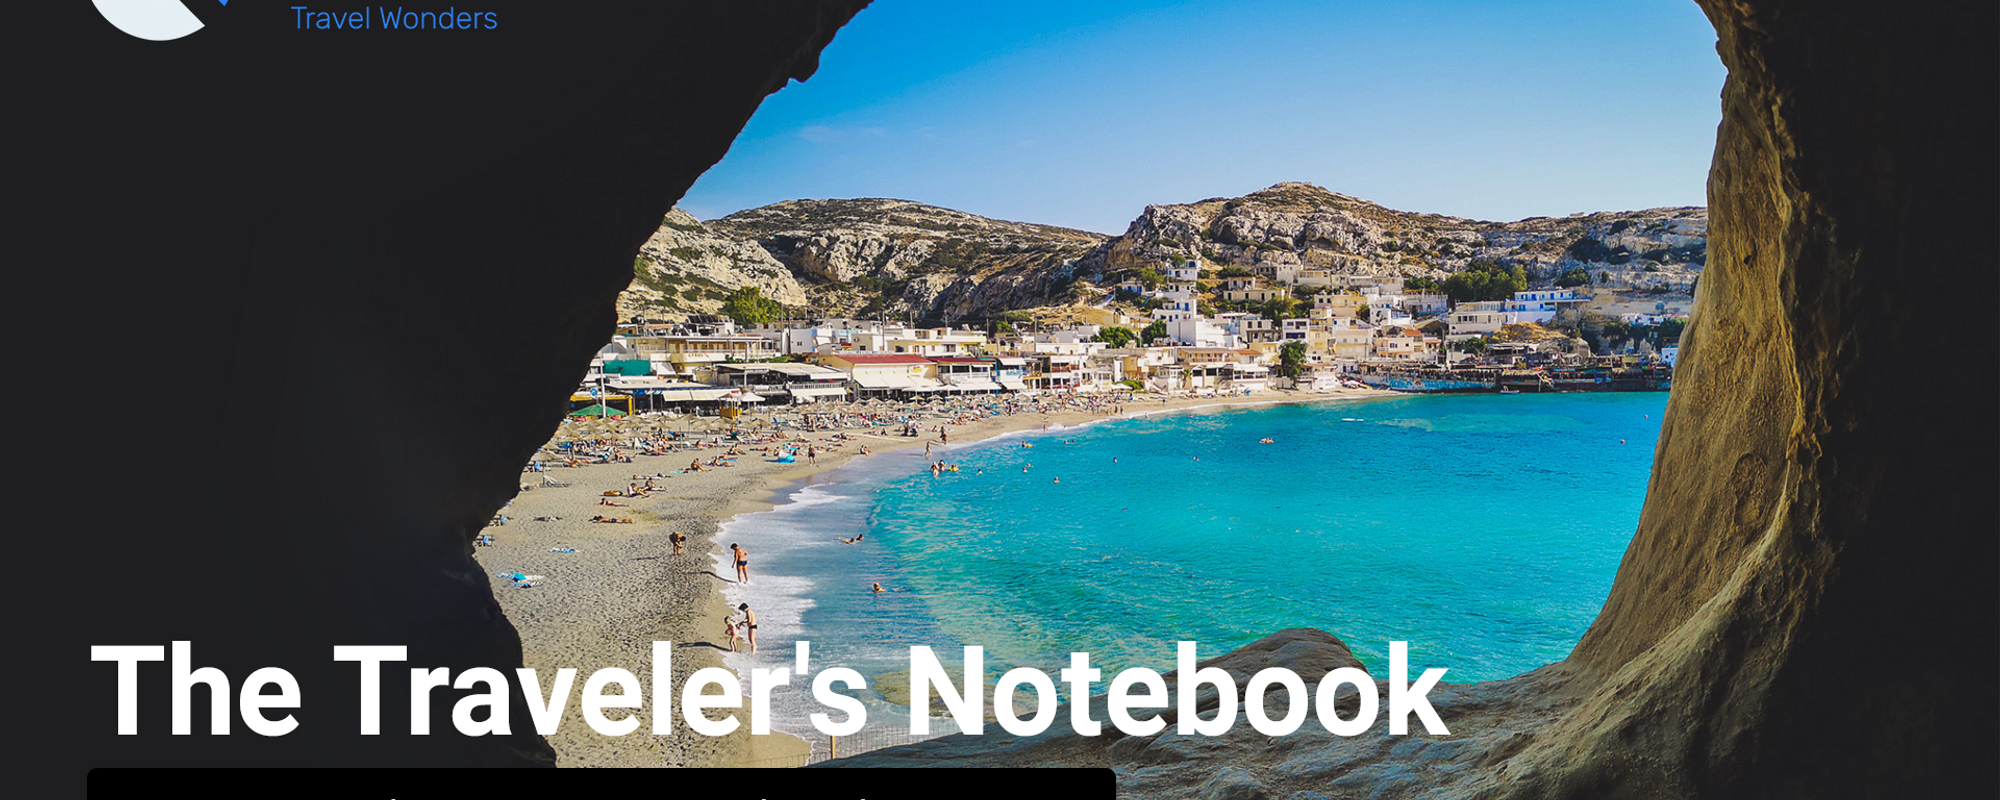 The Traveler's Notebook: Best Beaches in Crete Island, Greece